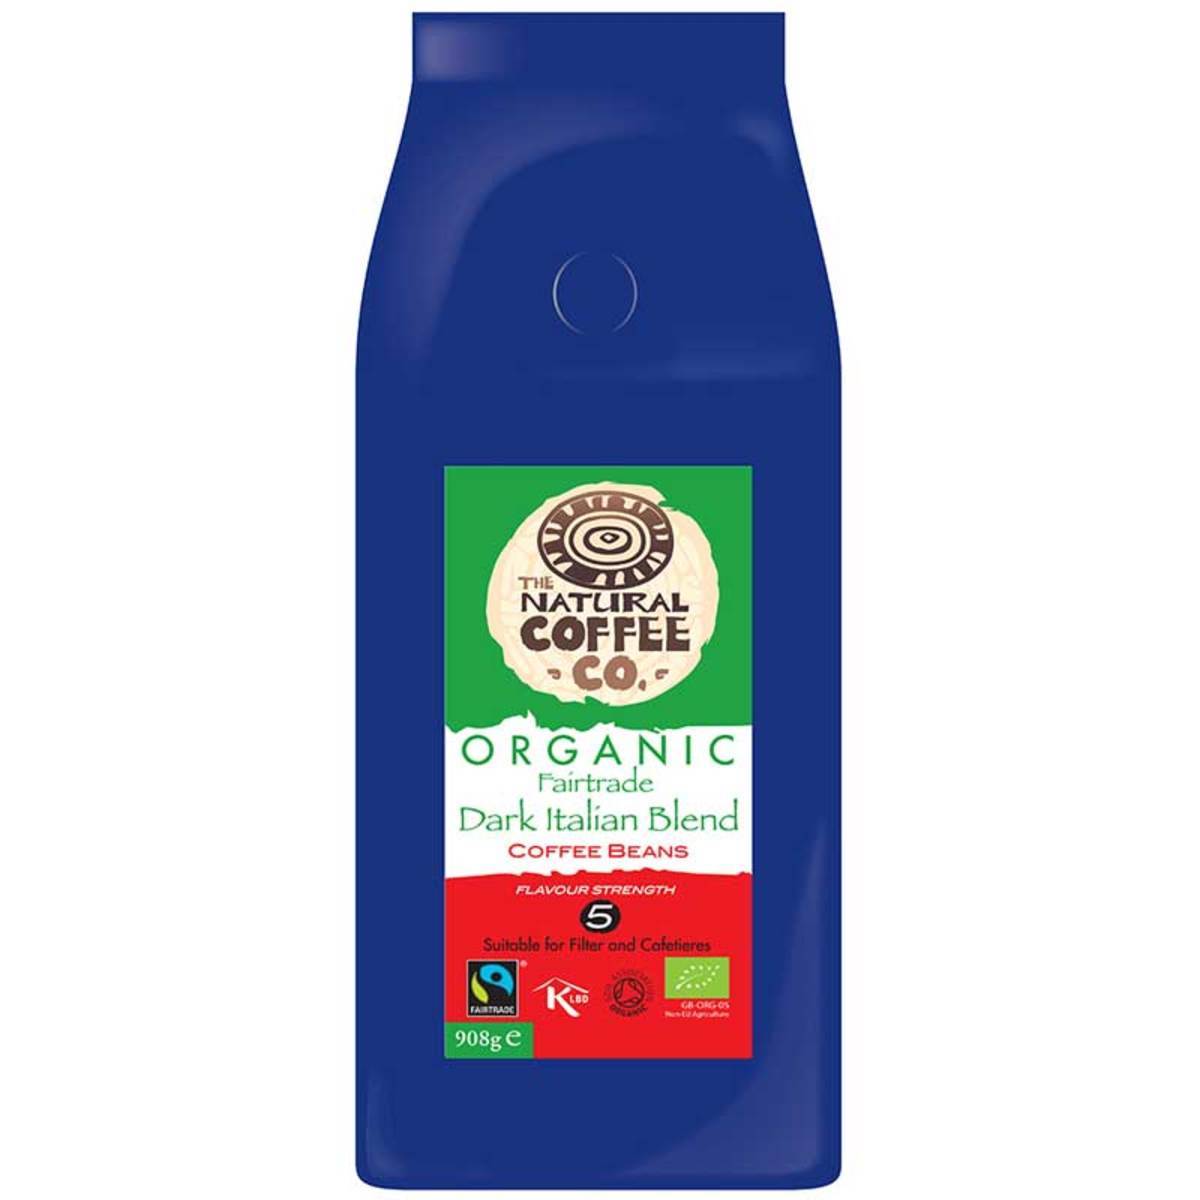 The Natural Coffee Co. Organic Dark Italian Blend Coffee, 908g Coffee Beans Costco UK Title  